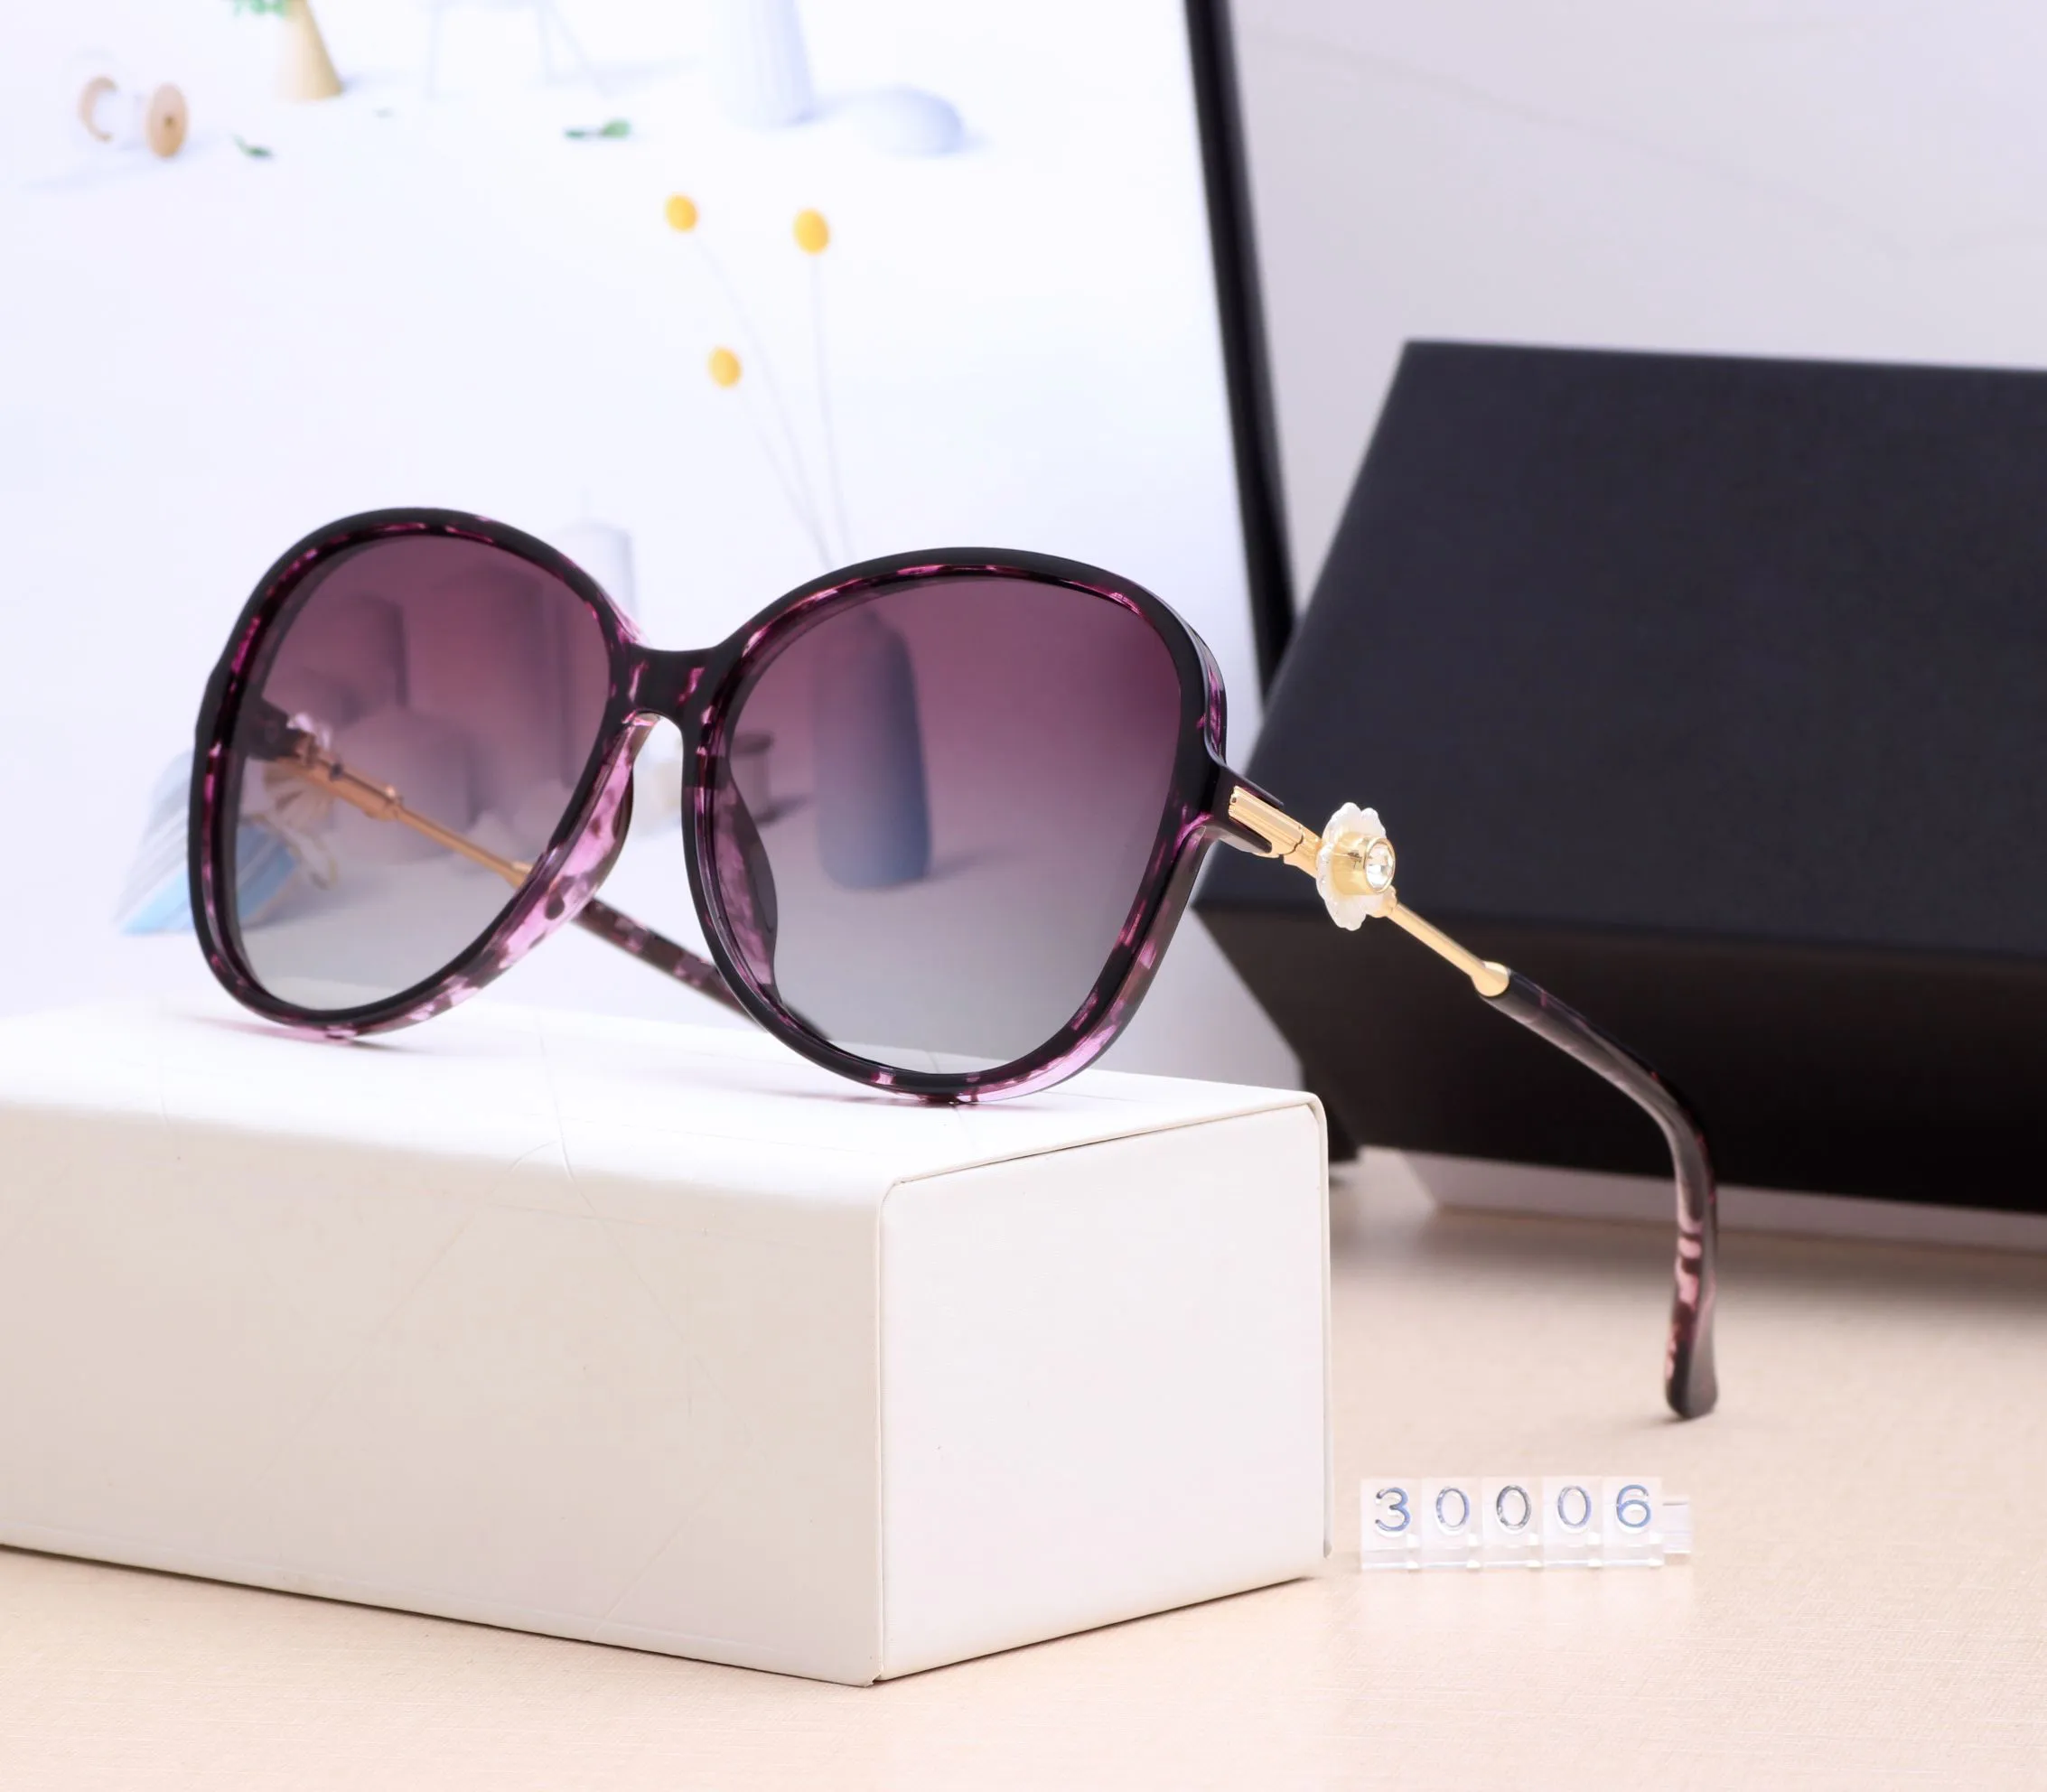 Designer Square Sunglasses Women Vintage Shades Driving Polarized Sun Glasses Fashion Metal Plank Sunglas Eyewear with box